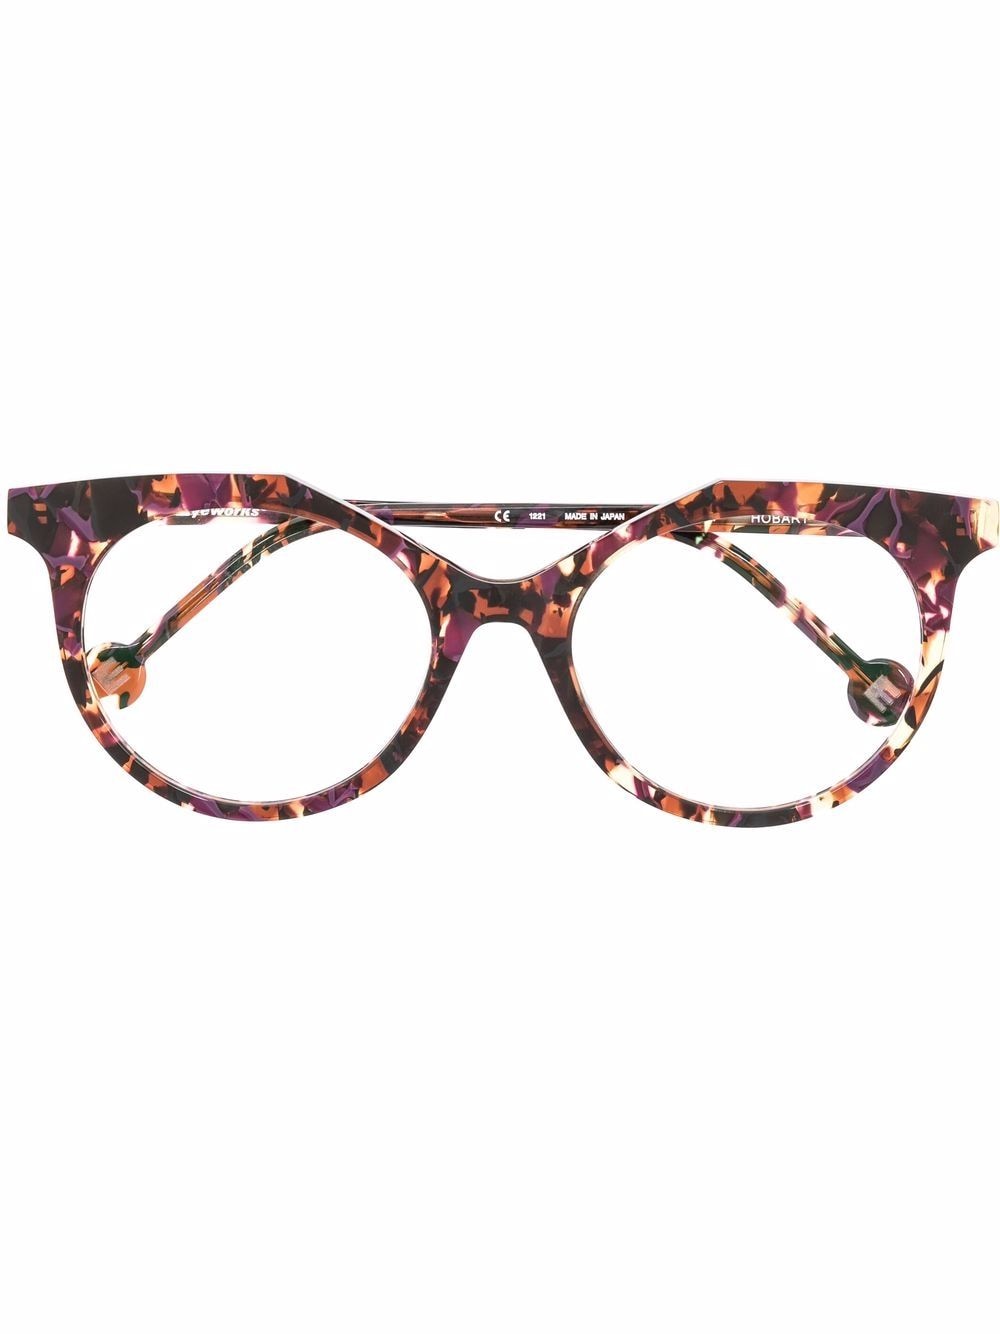 L.A. EYEWORKS Hobart round frame glasses - Brown von L.A. EYEWORKS